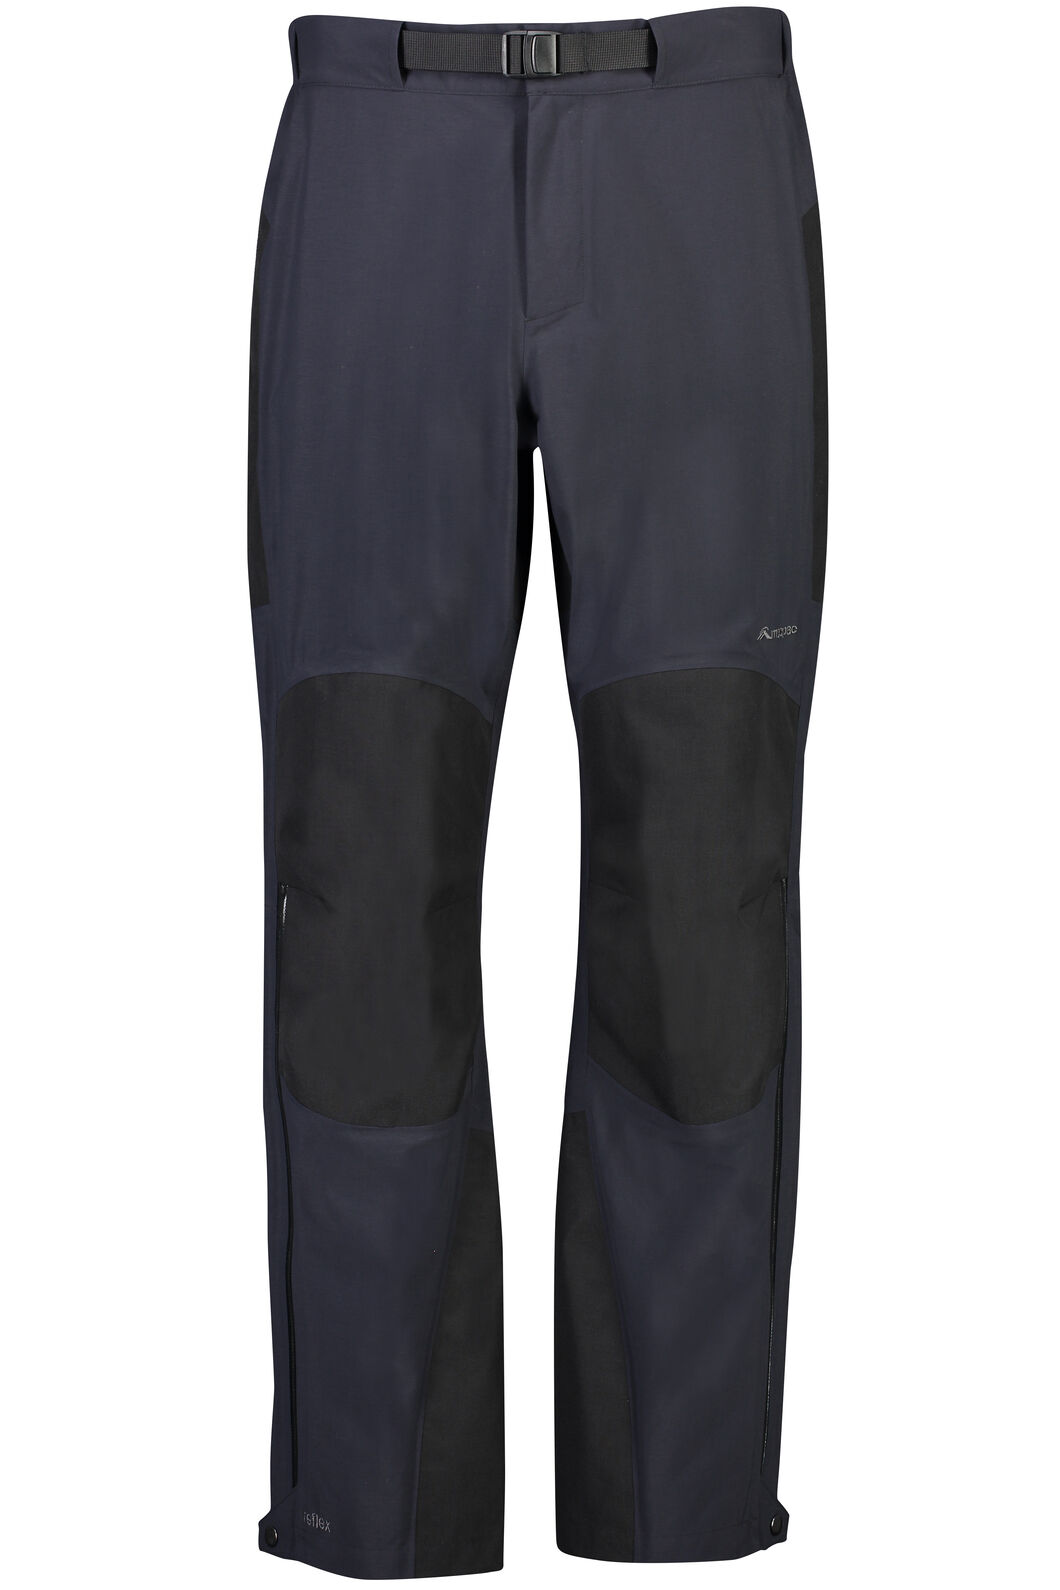 Macpac Gauge Reflex™ Rain Pants — Men's, Black, hi-res